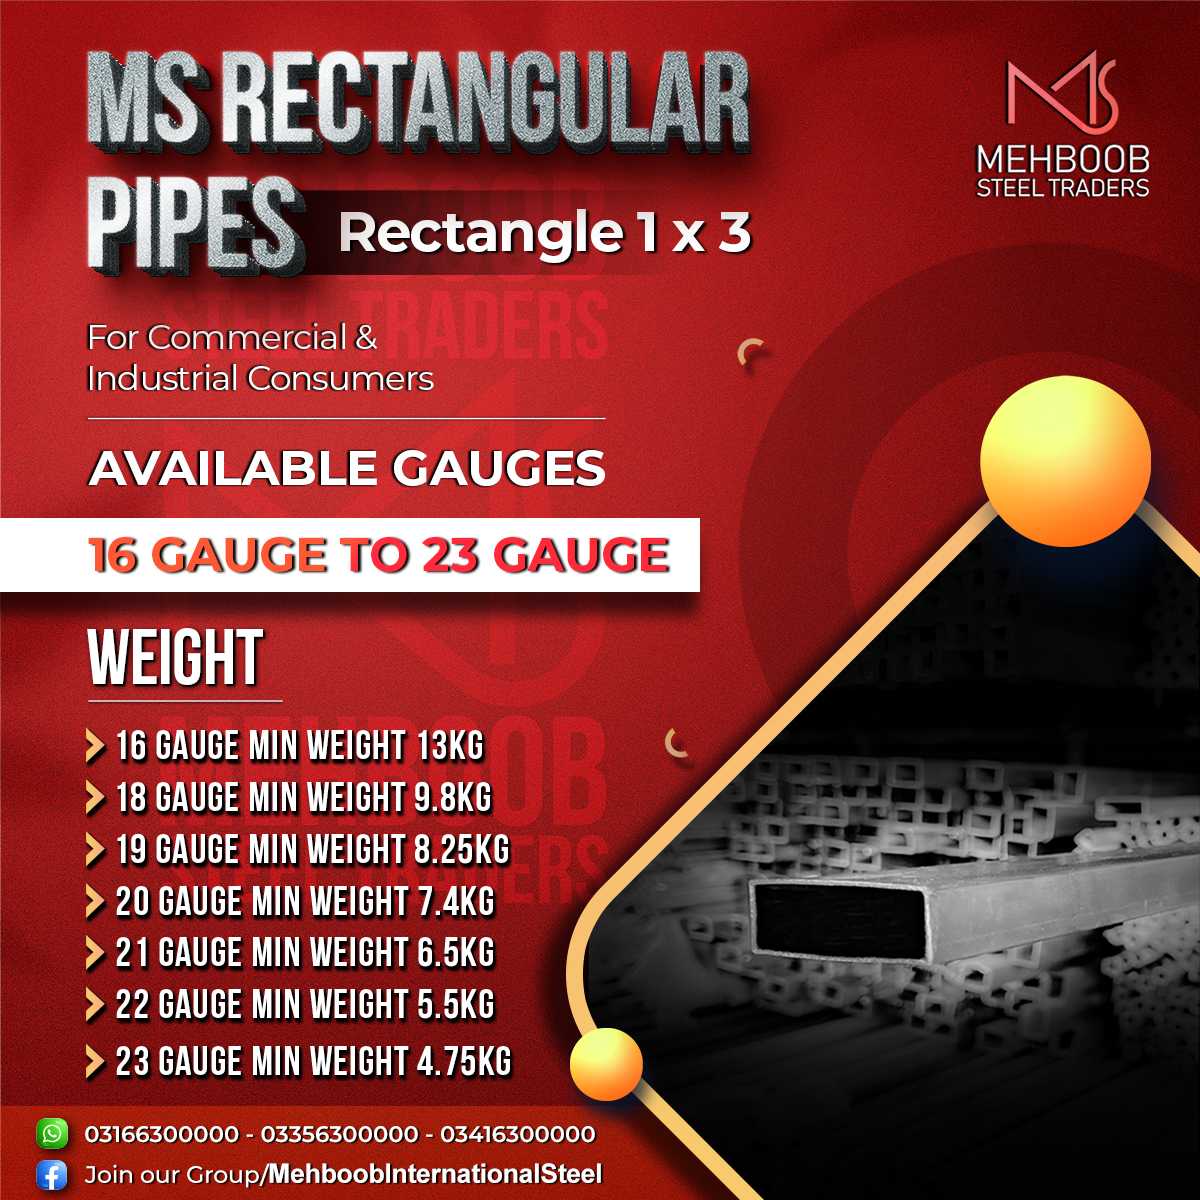 Rectangular pipes